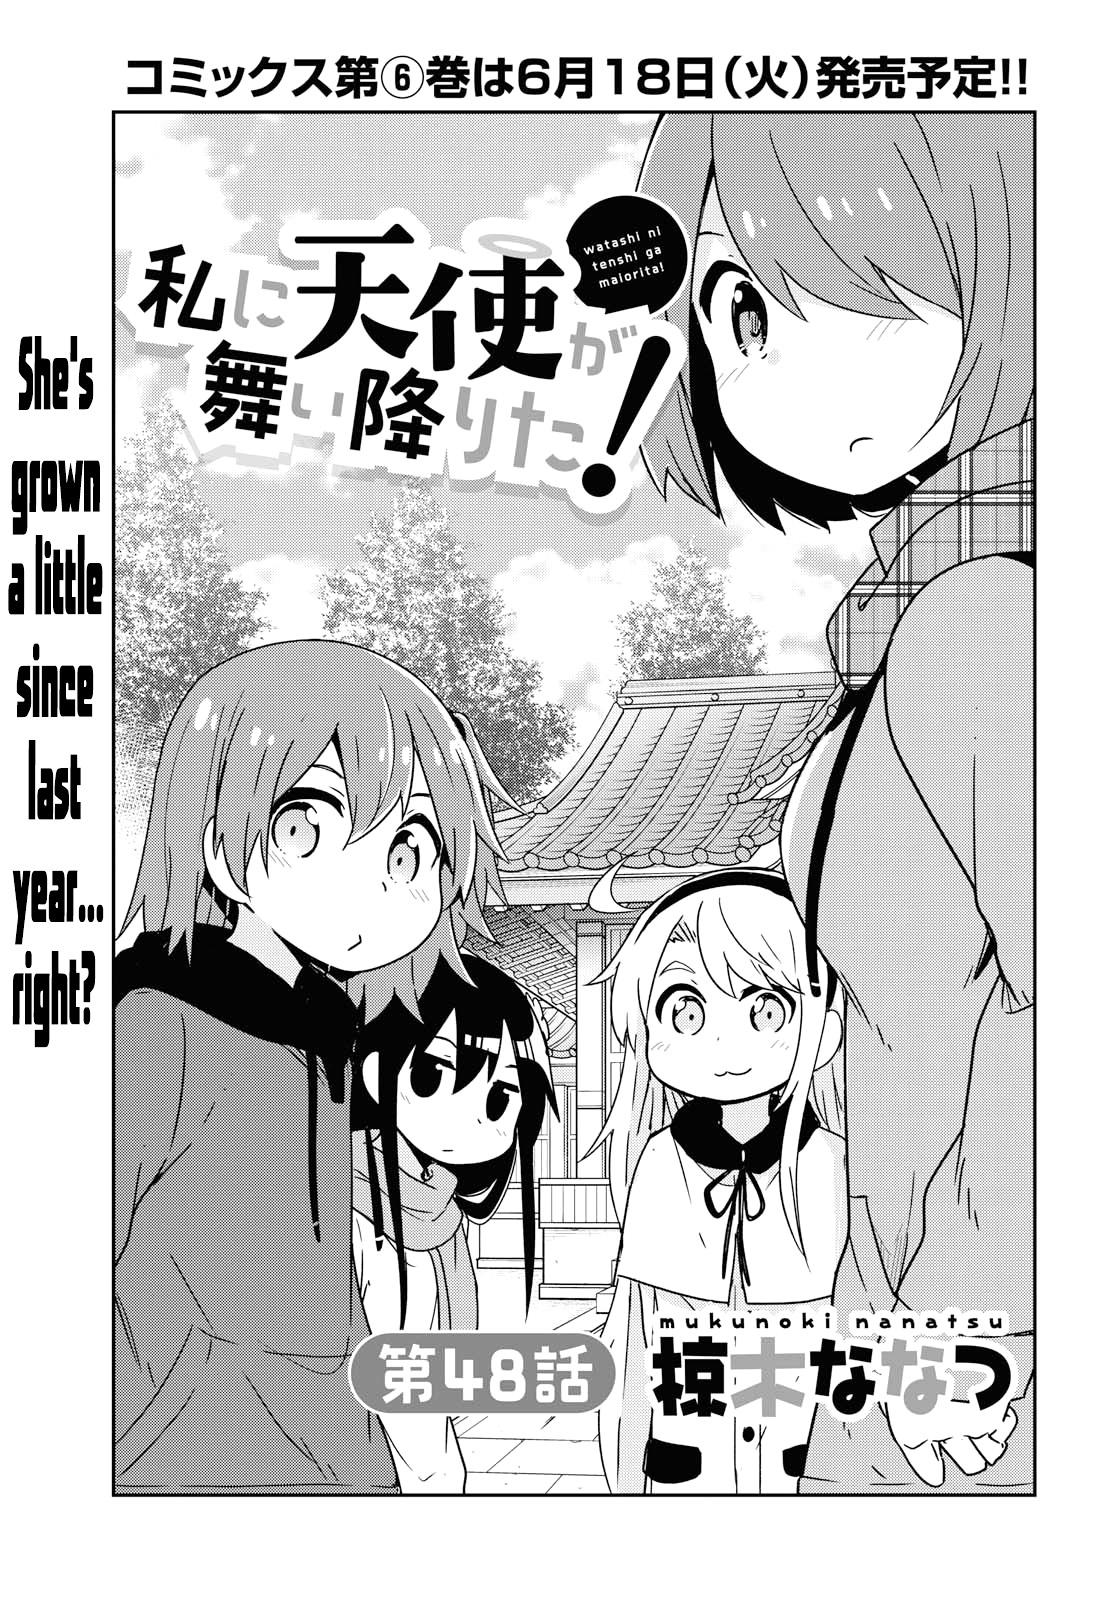 Read Watashi Ni Tenshi Ga Maiorita! Chapter 109 on Mangakakalot